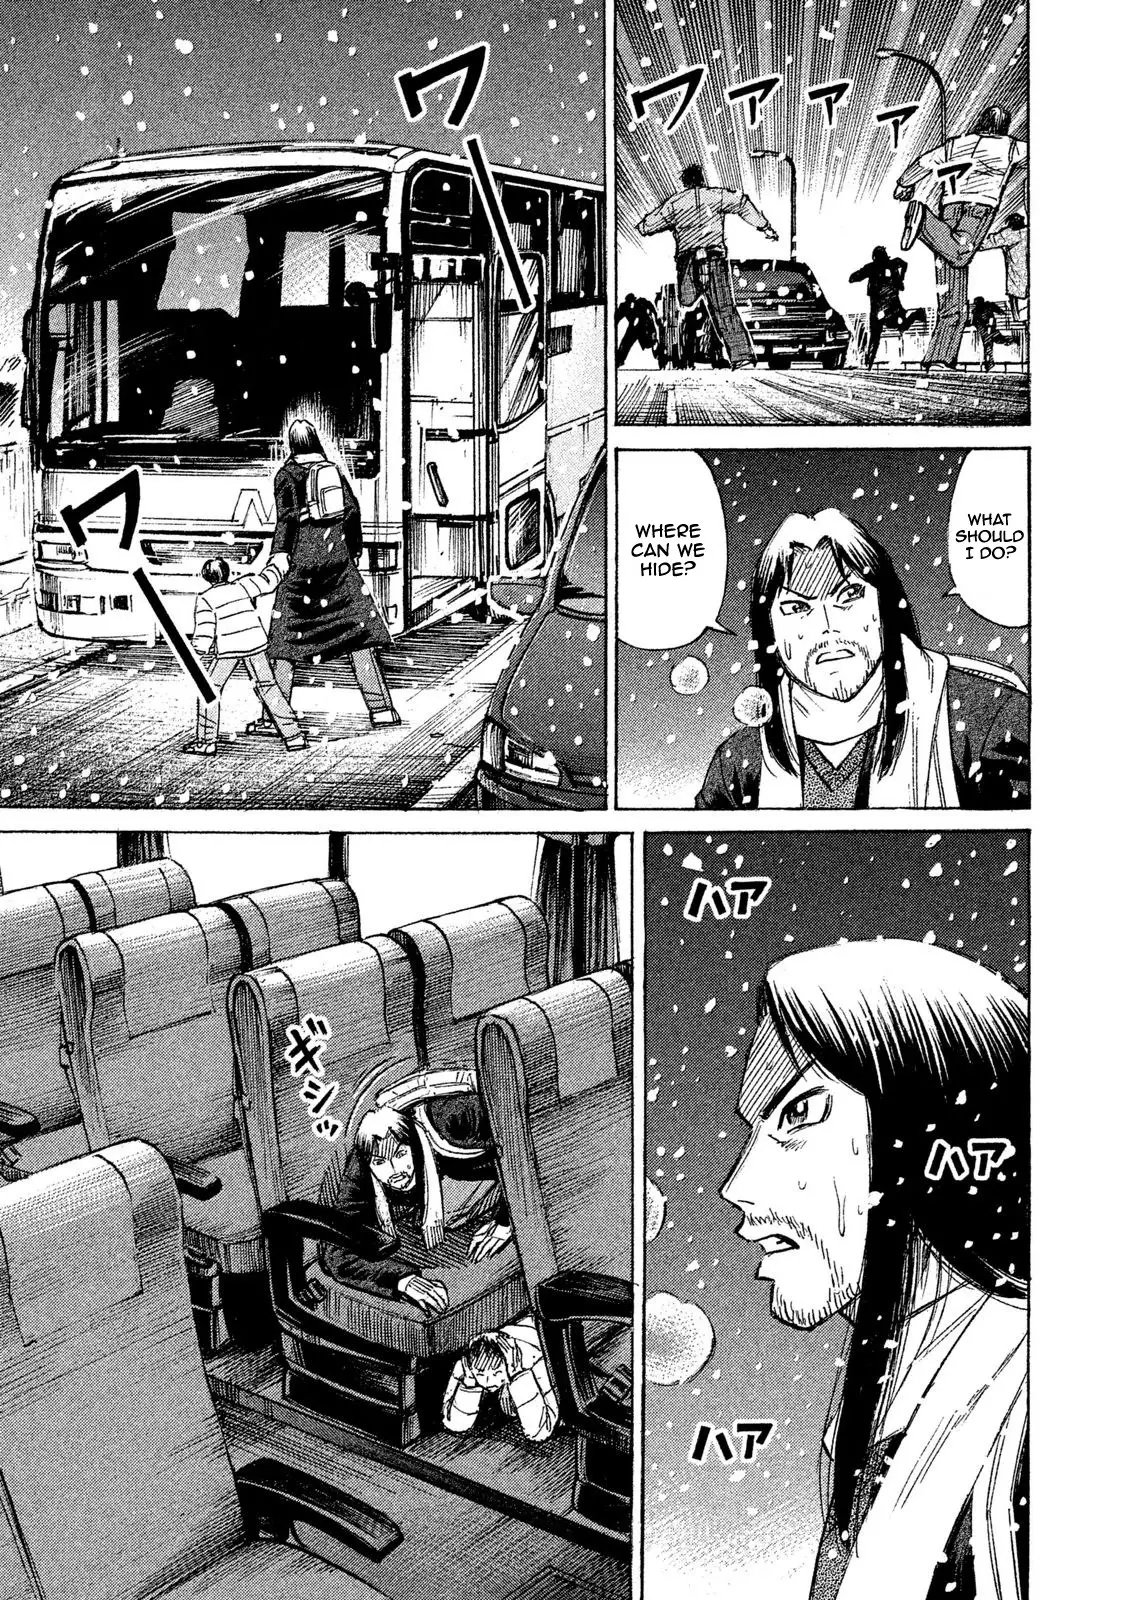 Higanjima - 48 Days Later - 20 page 14-26abc7c9